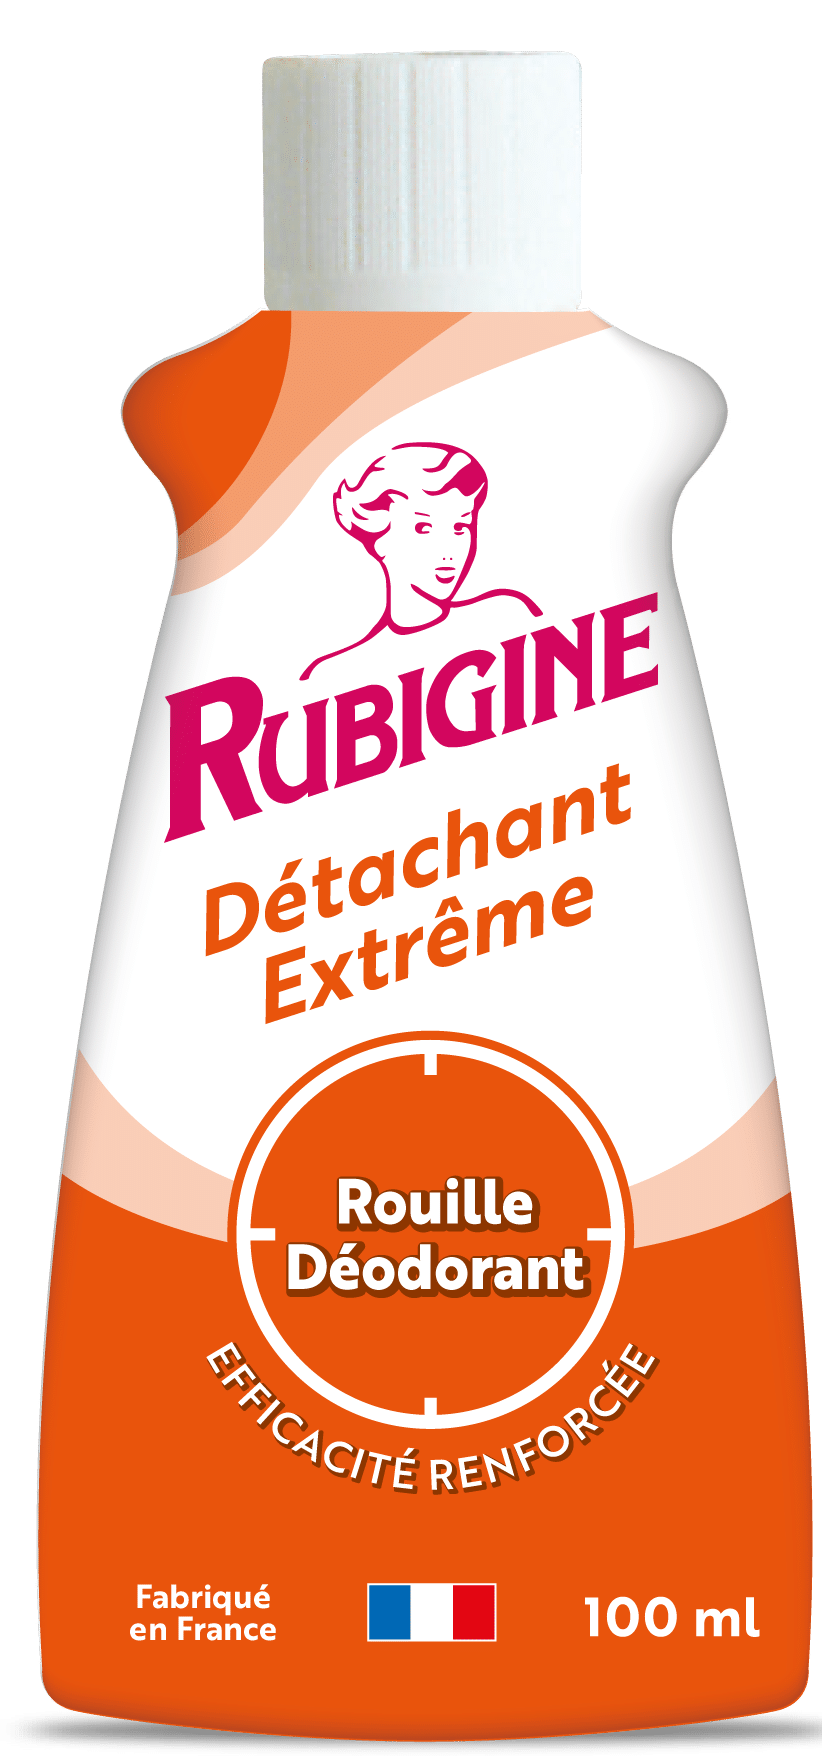 Emballage du produit Rubigine  rouille, déodorant